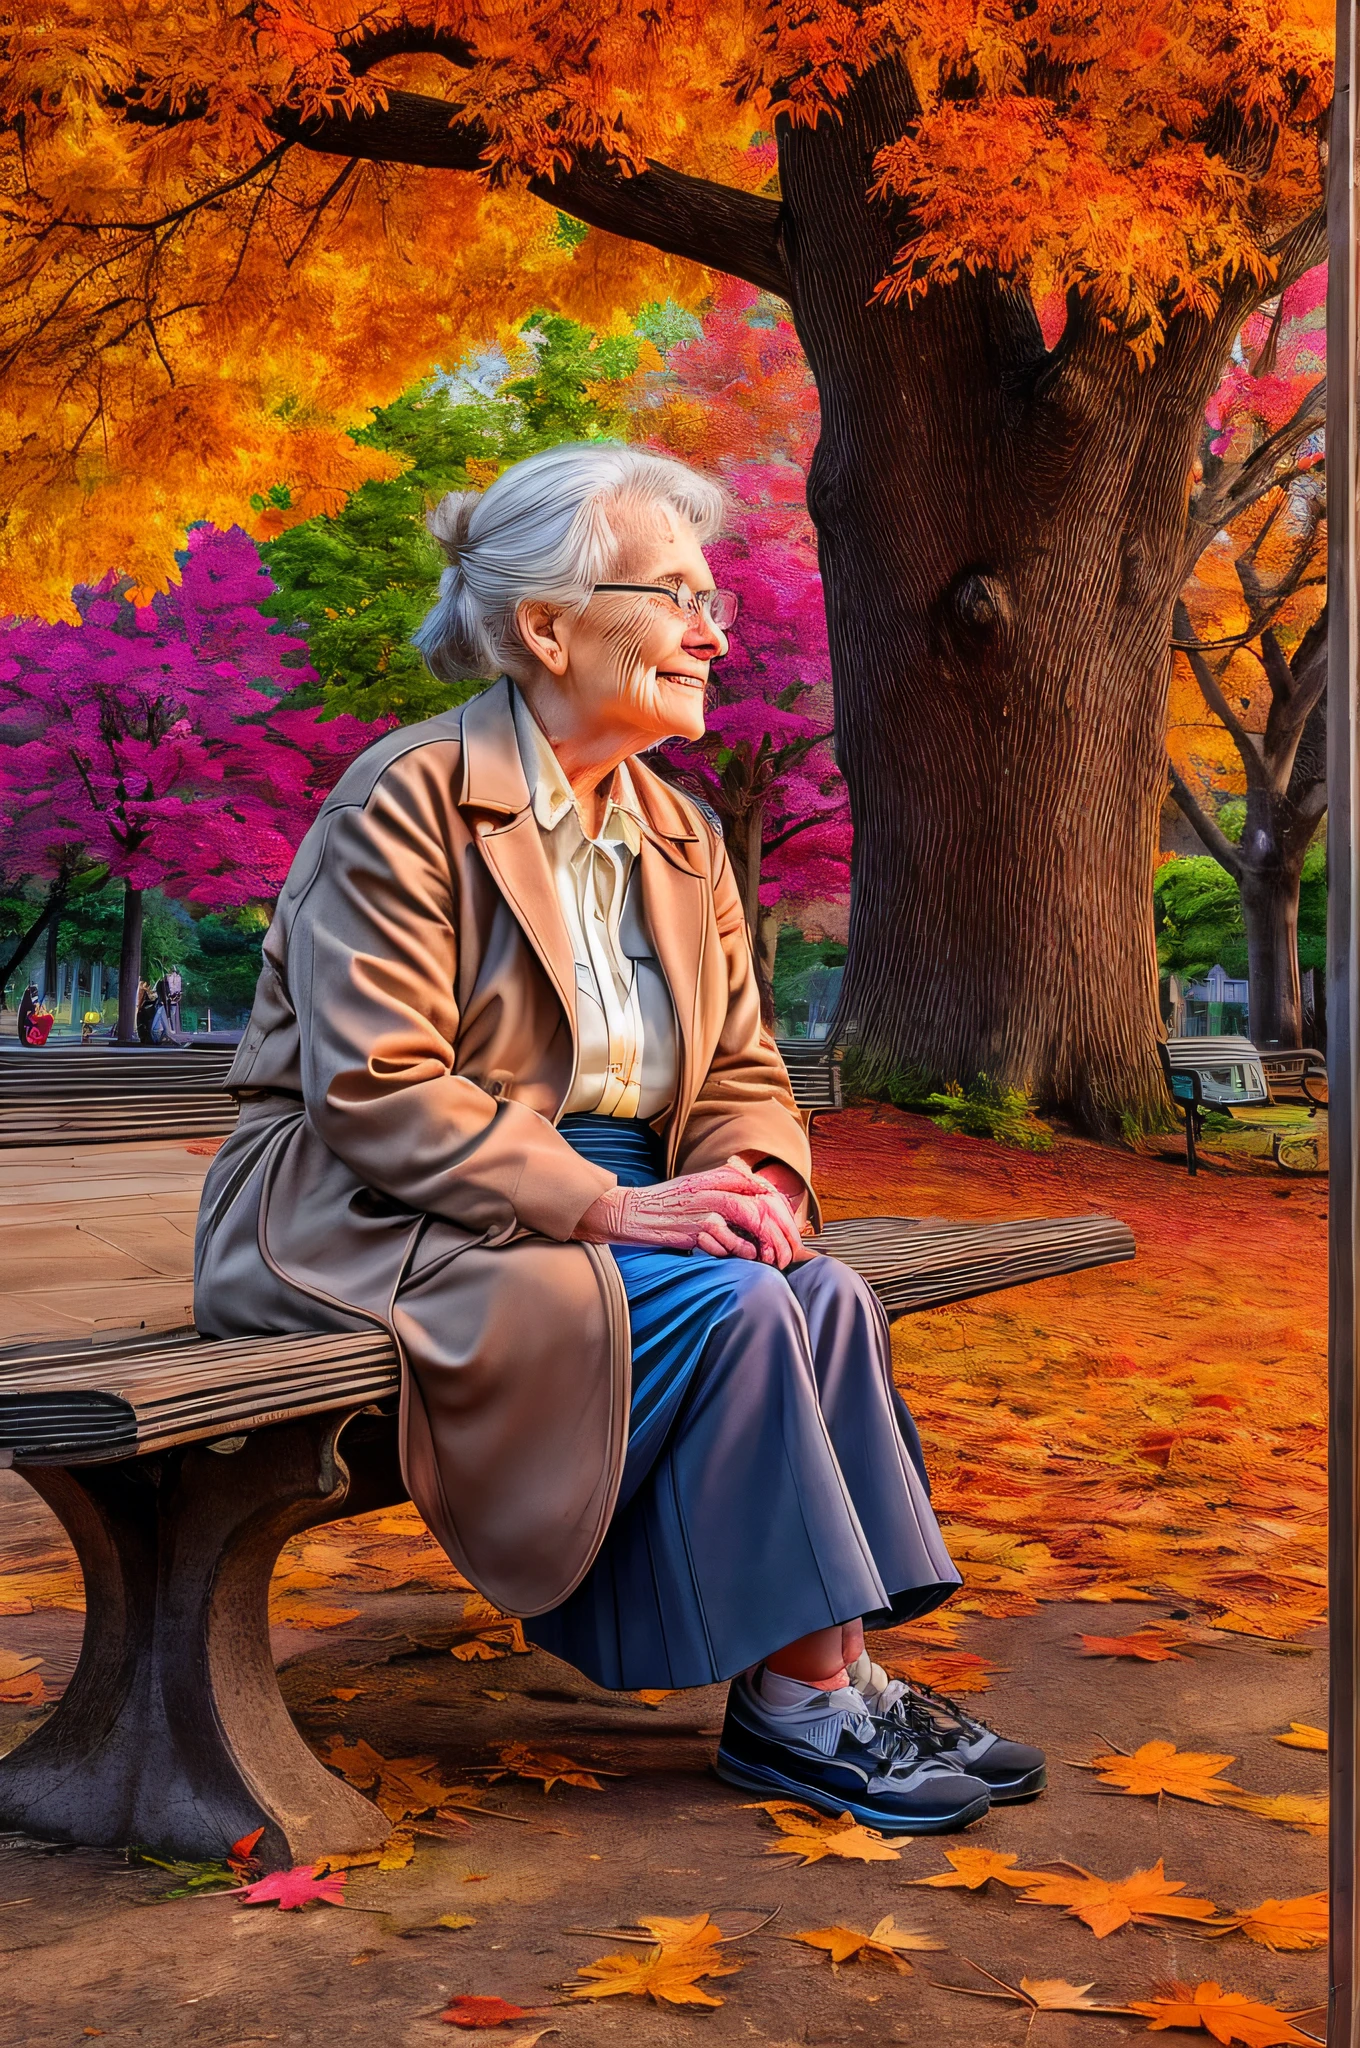 picture of 늙은 여자 벤치에 앉아 in the park under the maple tree in a park at autumn, 늙은 여자, 뚜렷해 보이는, 흰머리, 롤빵에, 파란색, 눈, 눈 that had good life, 역사적인 삶, 녹색 치마를 입고, 그리고 흰 블라우스, 다이나믹 신발, 벤치에 앉아, 벤치에 앉아 지팡이를 가까이 두고, 가을 단풍나무 아래, 빨간색으로 많은 잎, 오렌지와 눈썹, 전체 스펙트럼, 생생한 색상, 해가 지고 있다, 저녁 시간, 도시 공원 배경, 최고의 품질, 16,000, [매우 상세한], 걸작, 최고의 품질, (매우 상세한), 전신, 울트라 와이드 샷, 사실적인